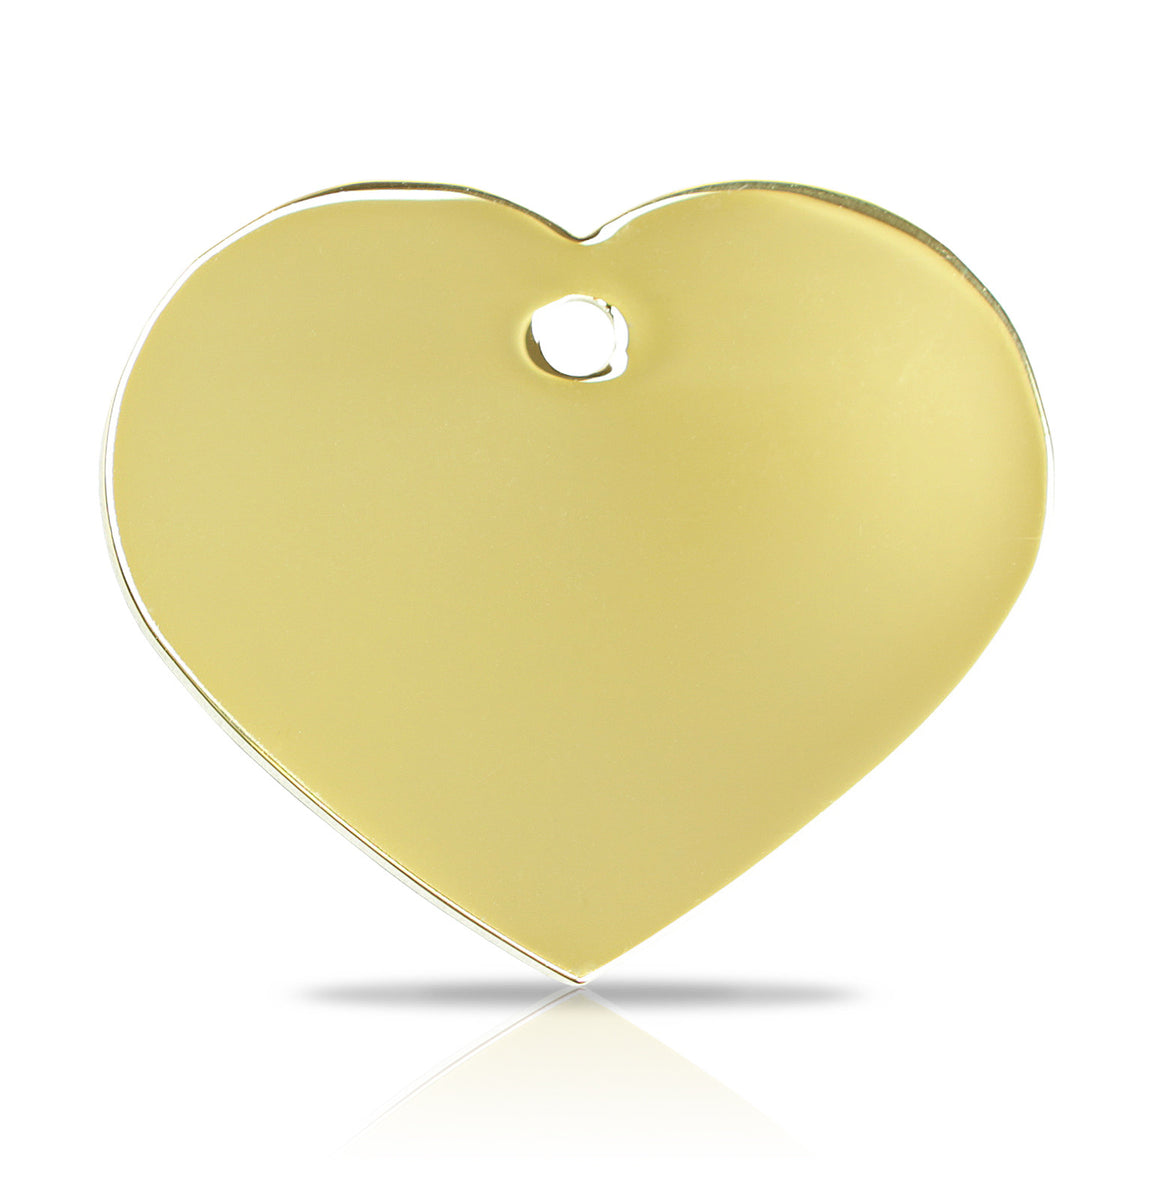 TaggIT Engraving Prestige Large Heart Gold iMarc Pet Tag